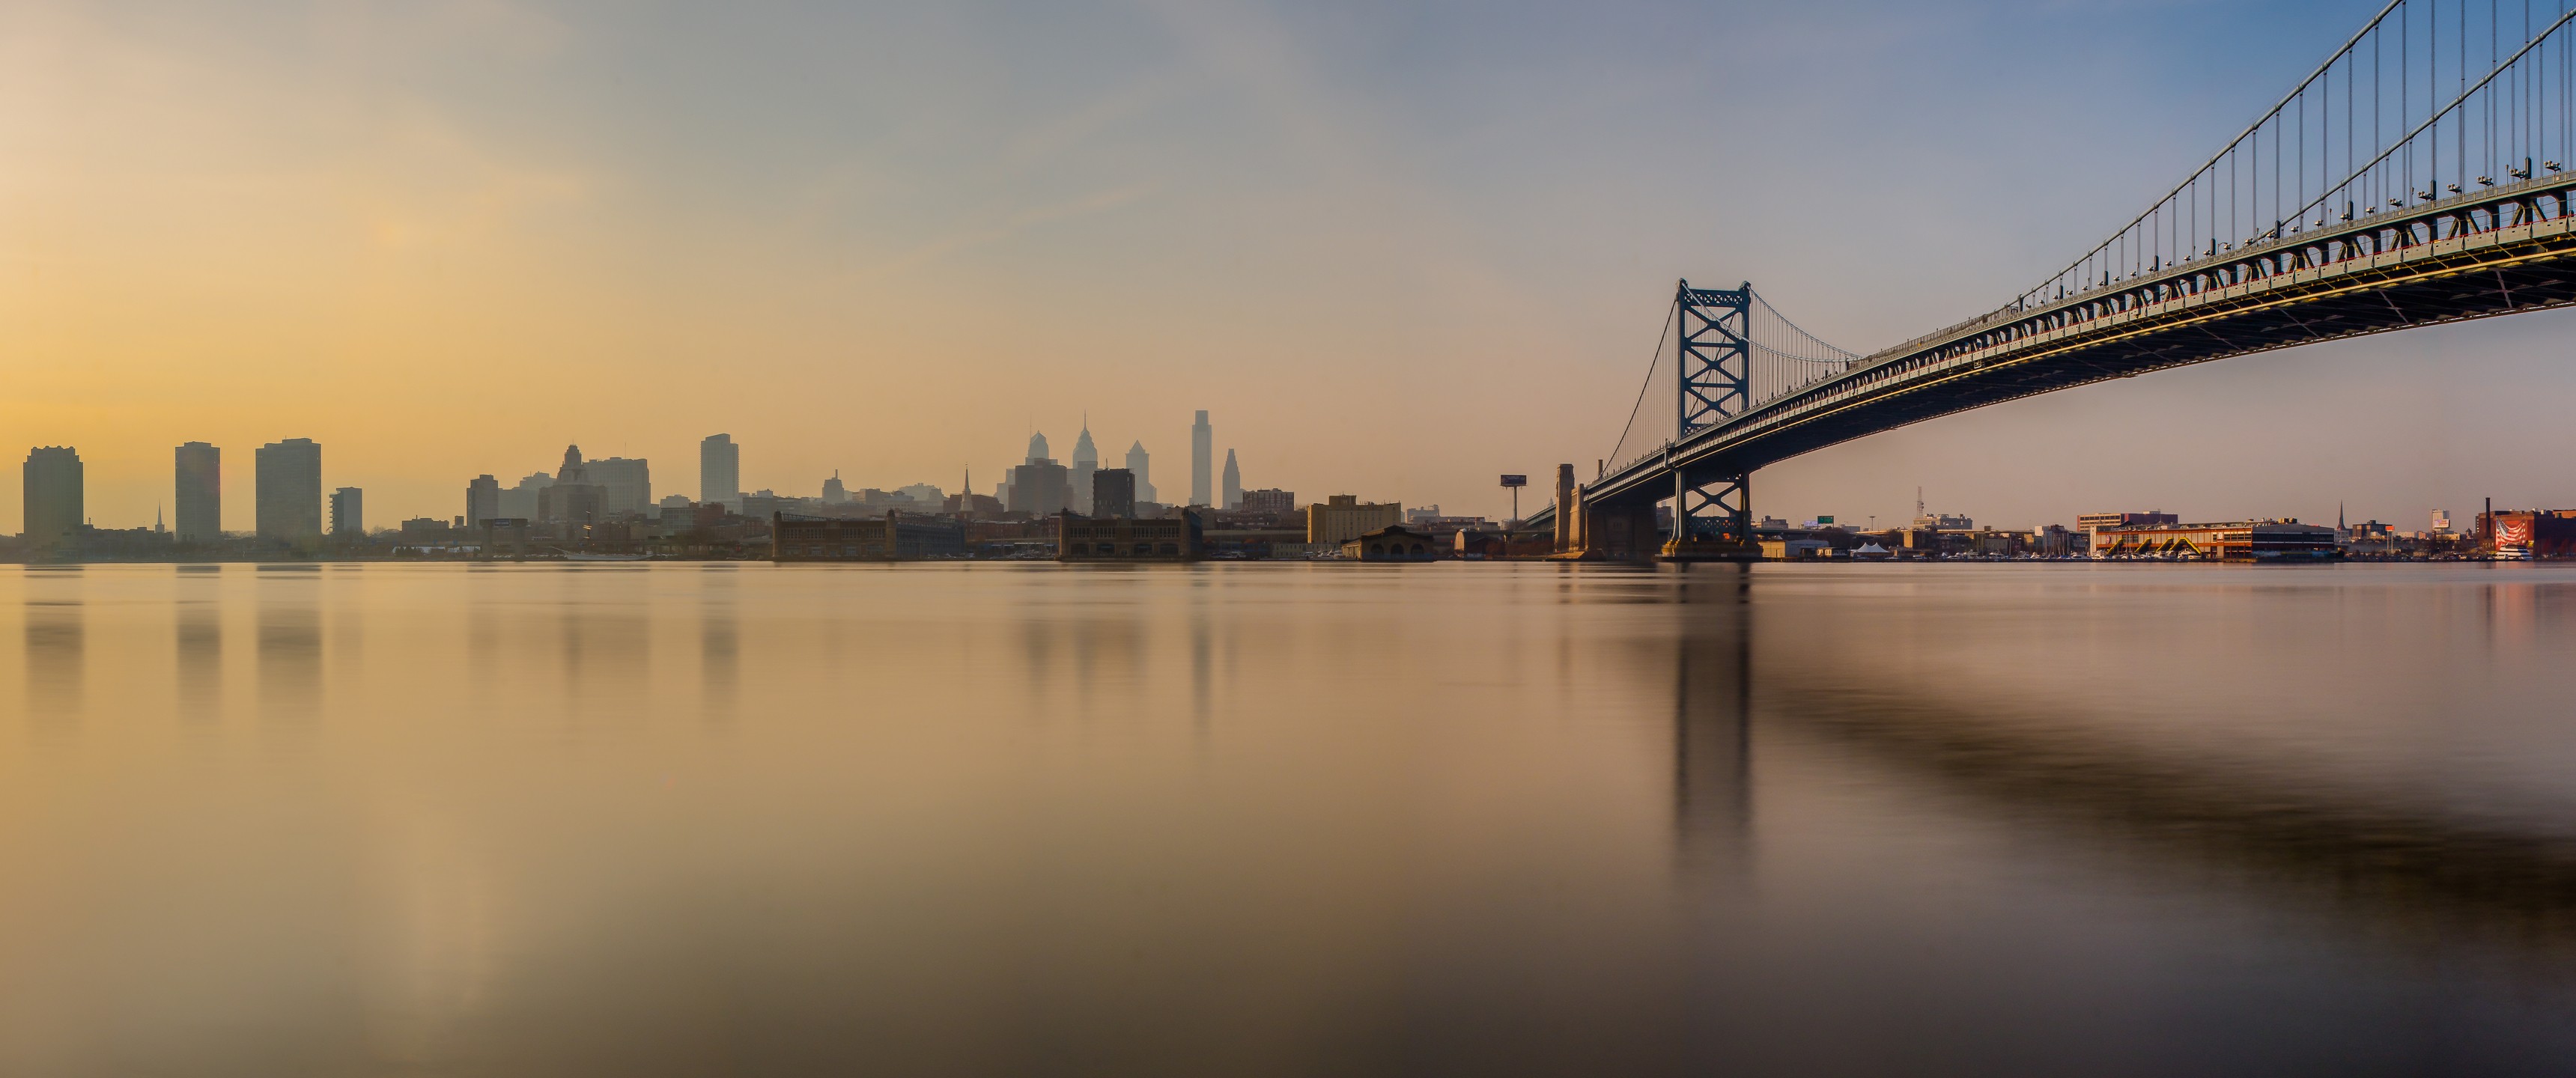 City Bridge Morning Reflection Philadelphia 3440x1440